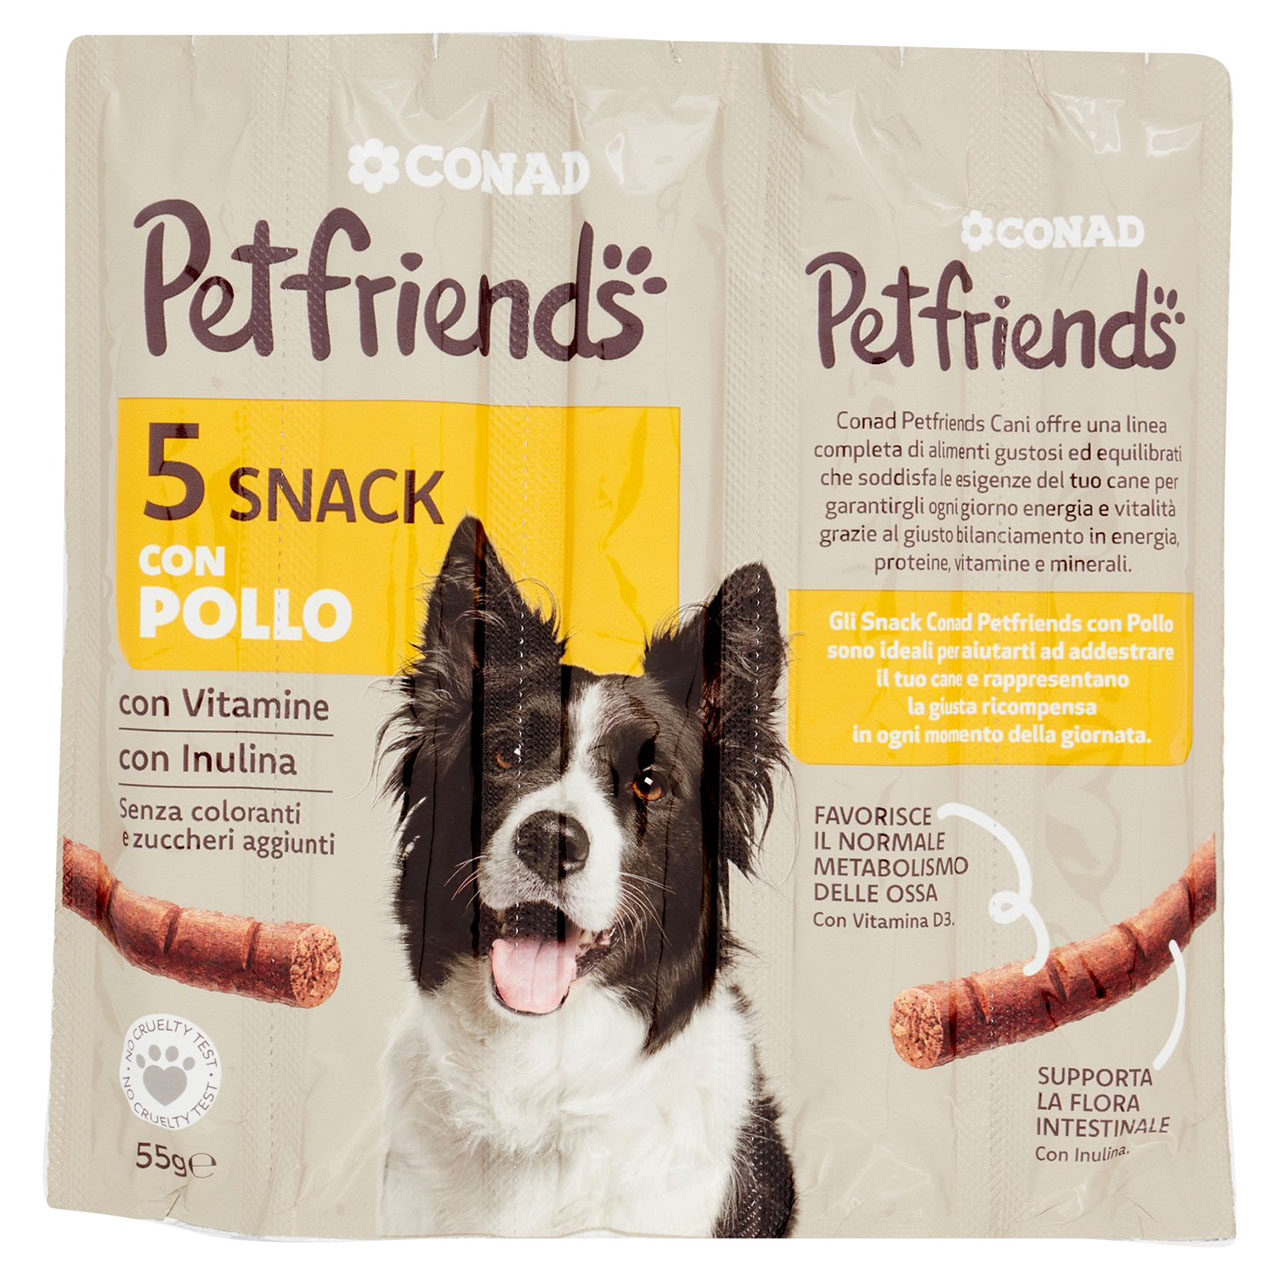 Petfriends Snack con Pollo 5 x 11 g online